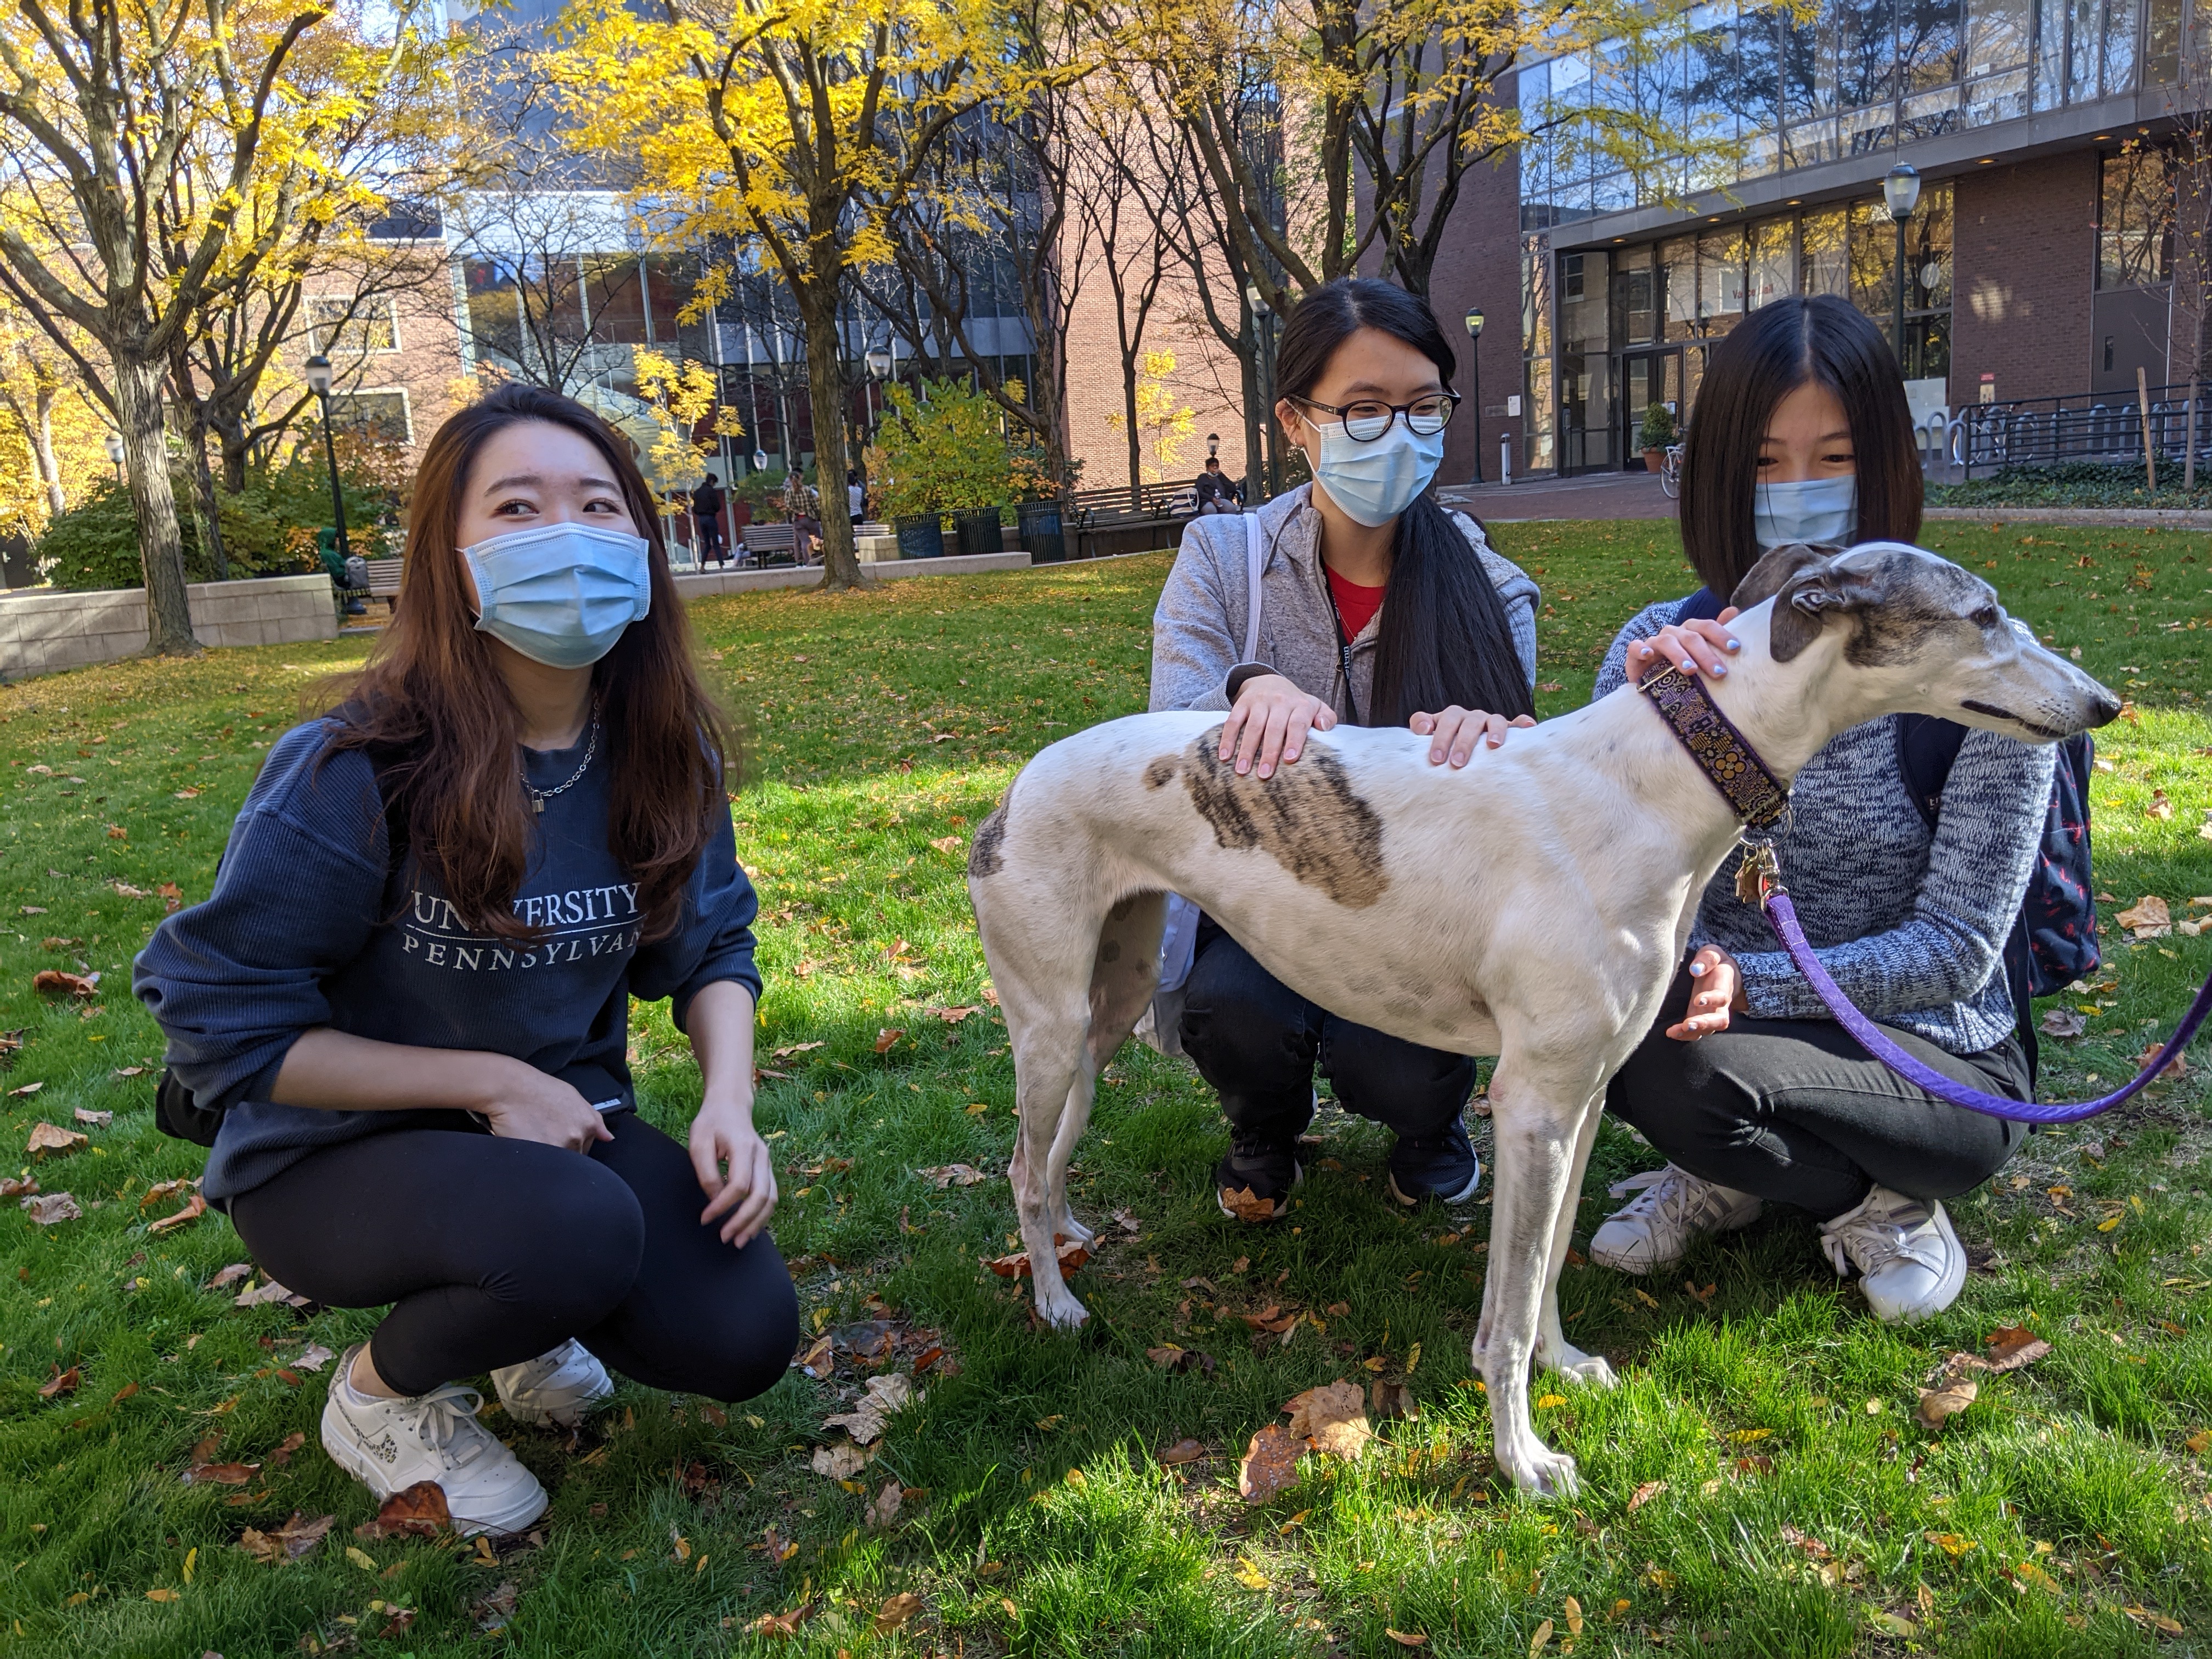 Penn students petting a dog outside